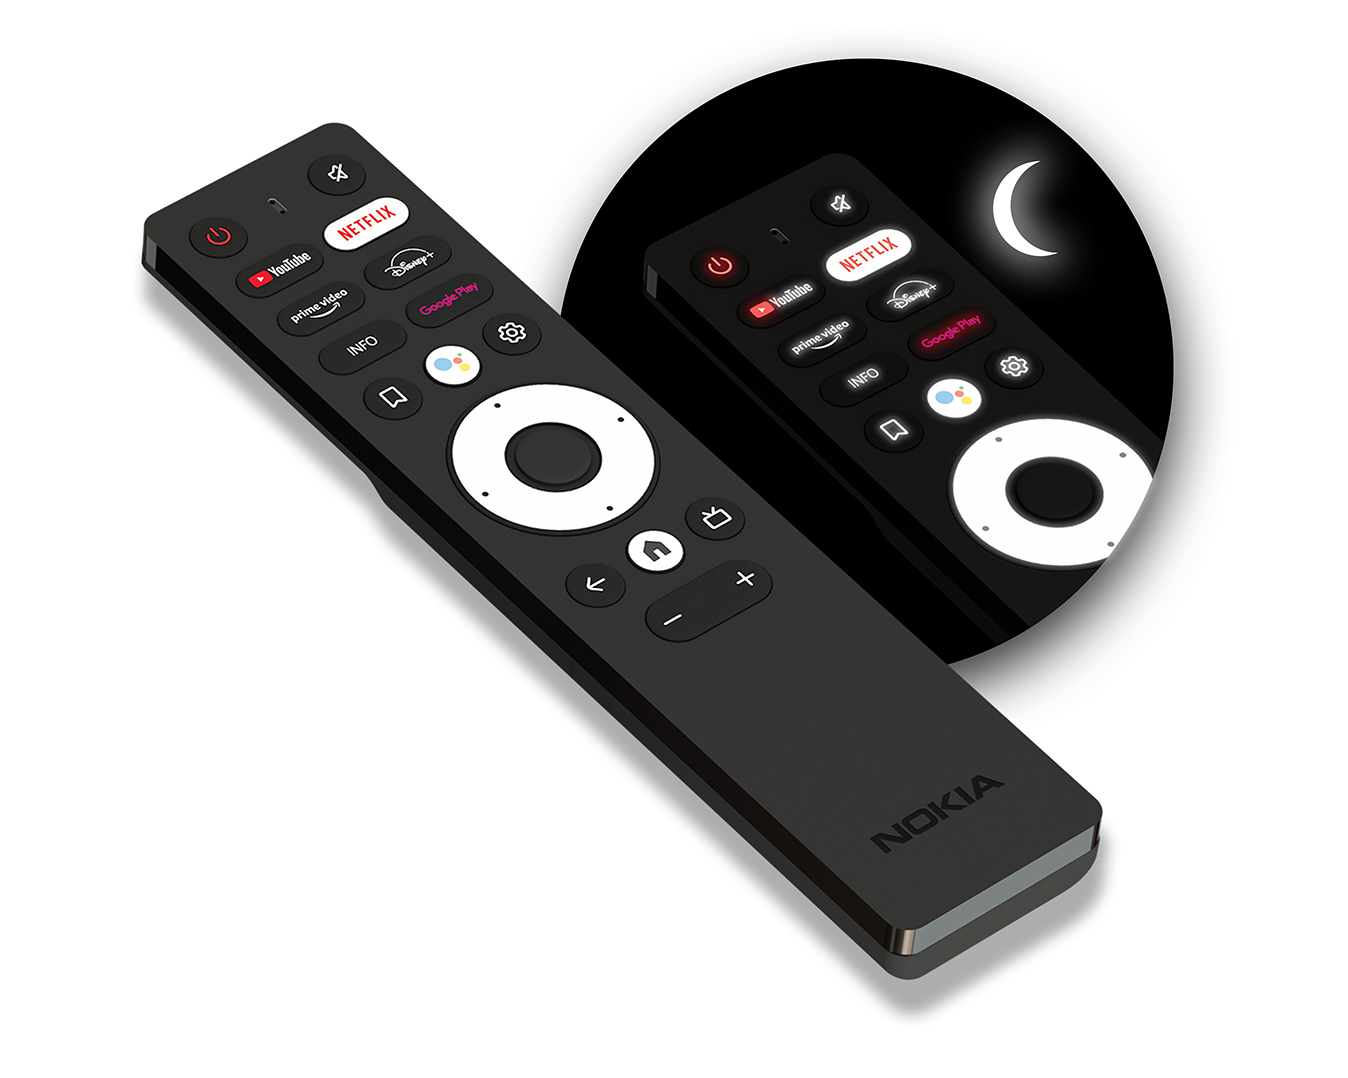 Nokia small remote control (Nokia Streaming Box 8000) 